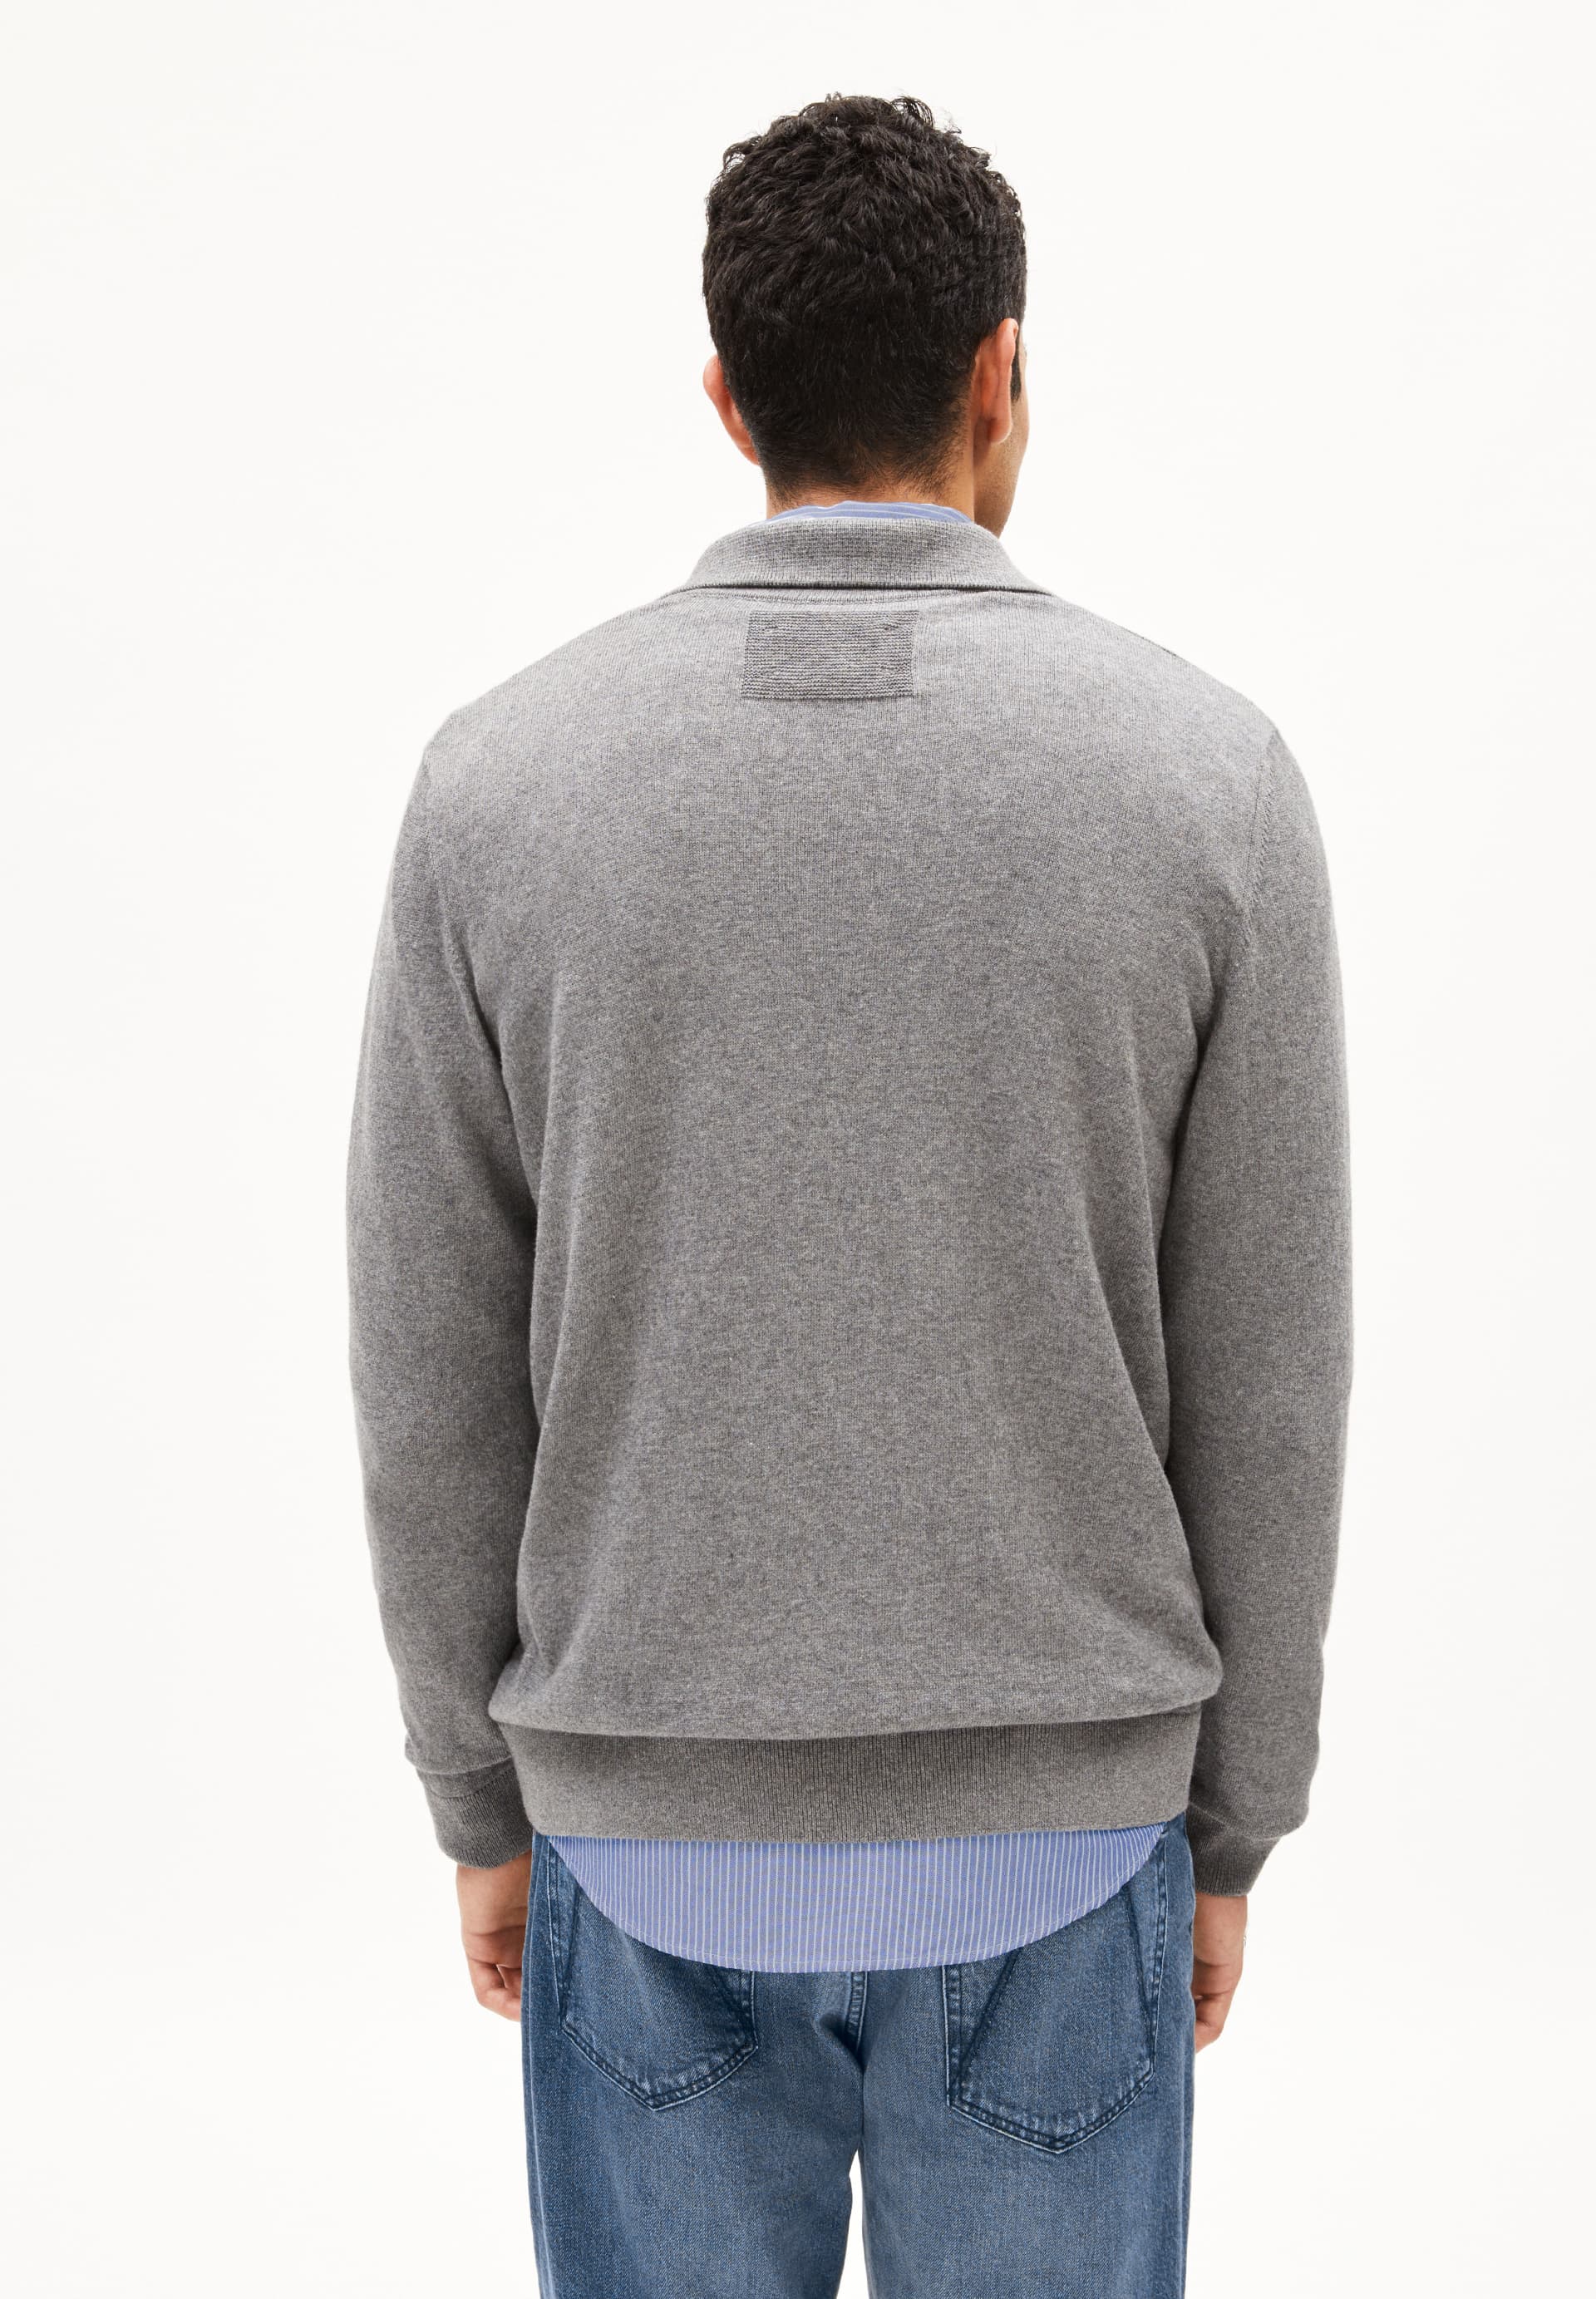 FAAUSTOS Sweater Regular Fit made of Organic Wool Mix